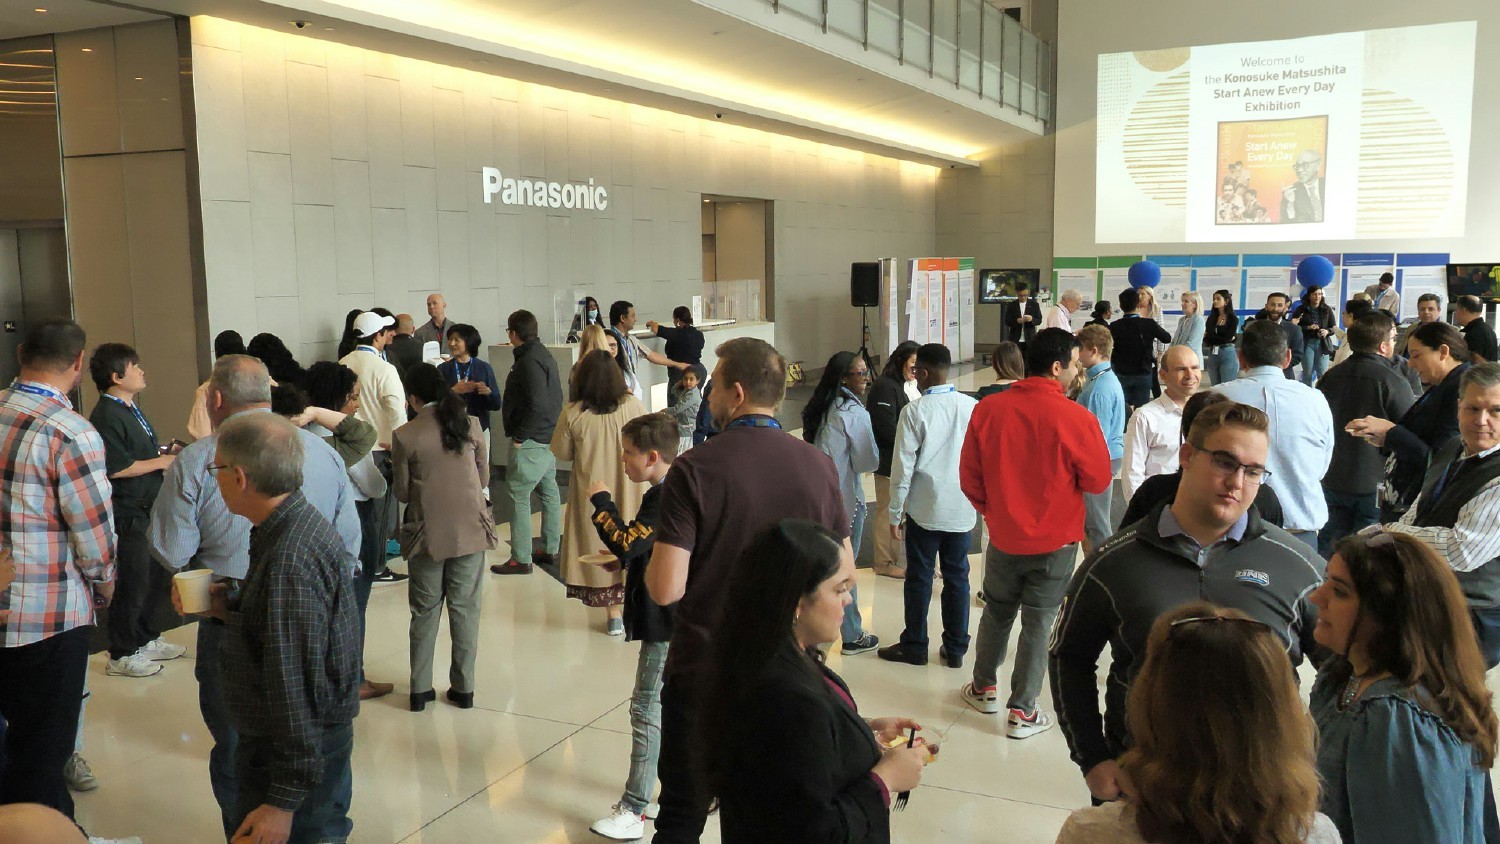 Panasonic employees attending an exhibition event featuring the Panasonic founder Konosuke Matsushita